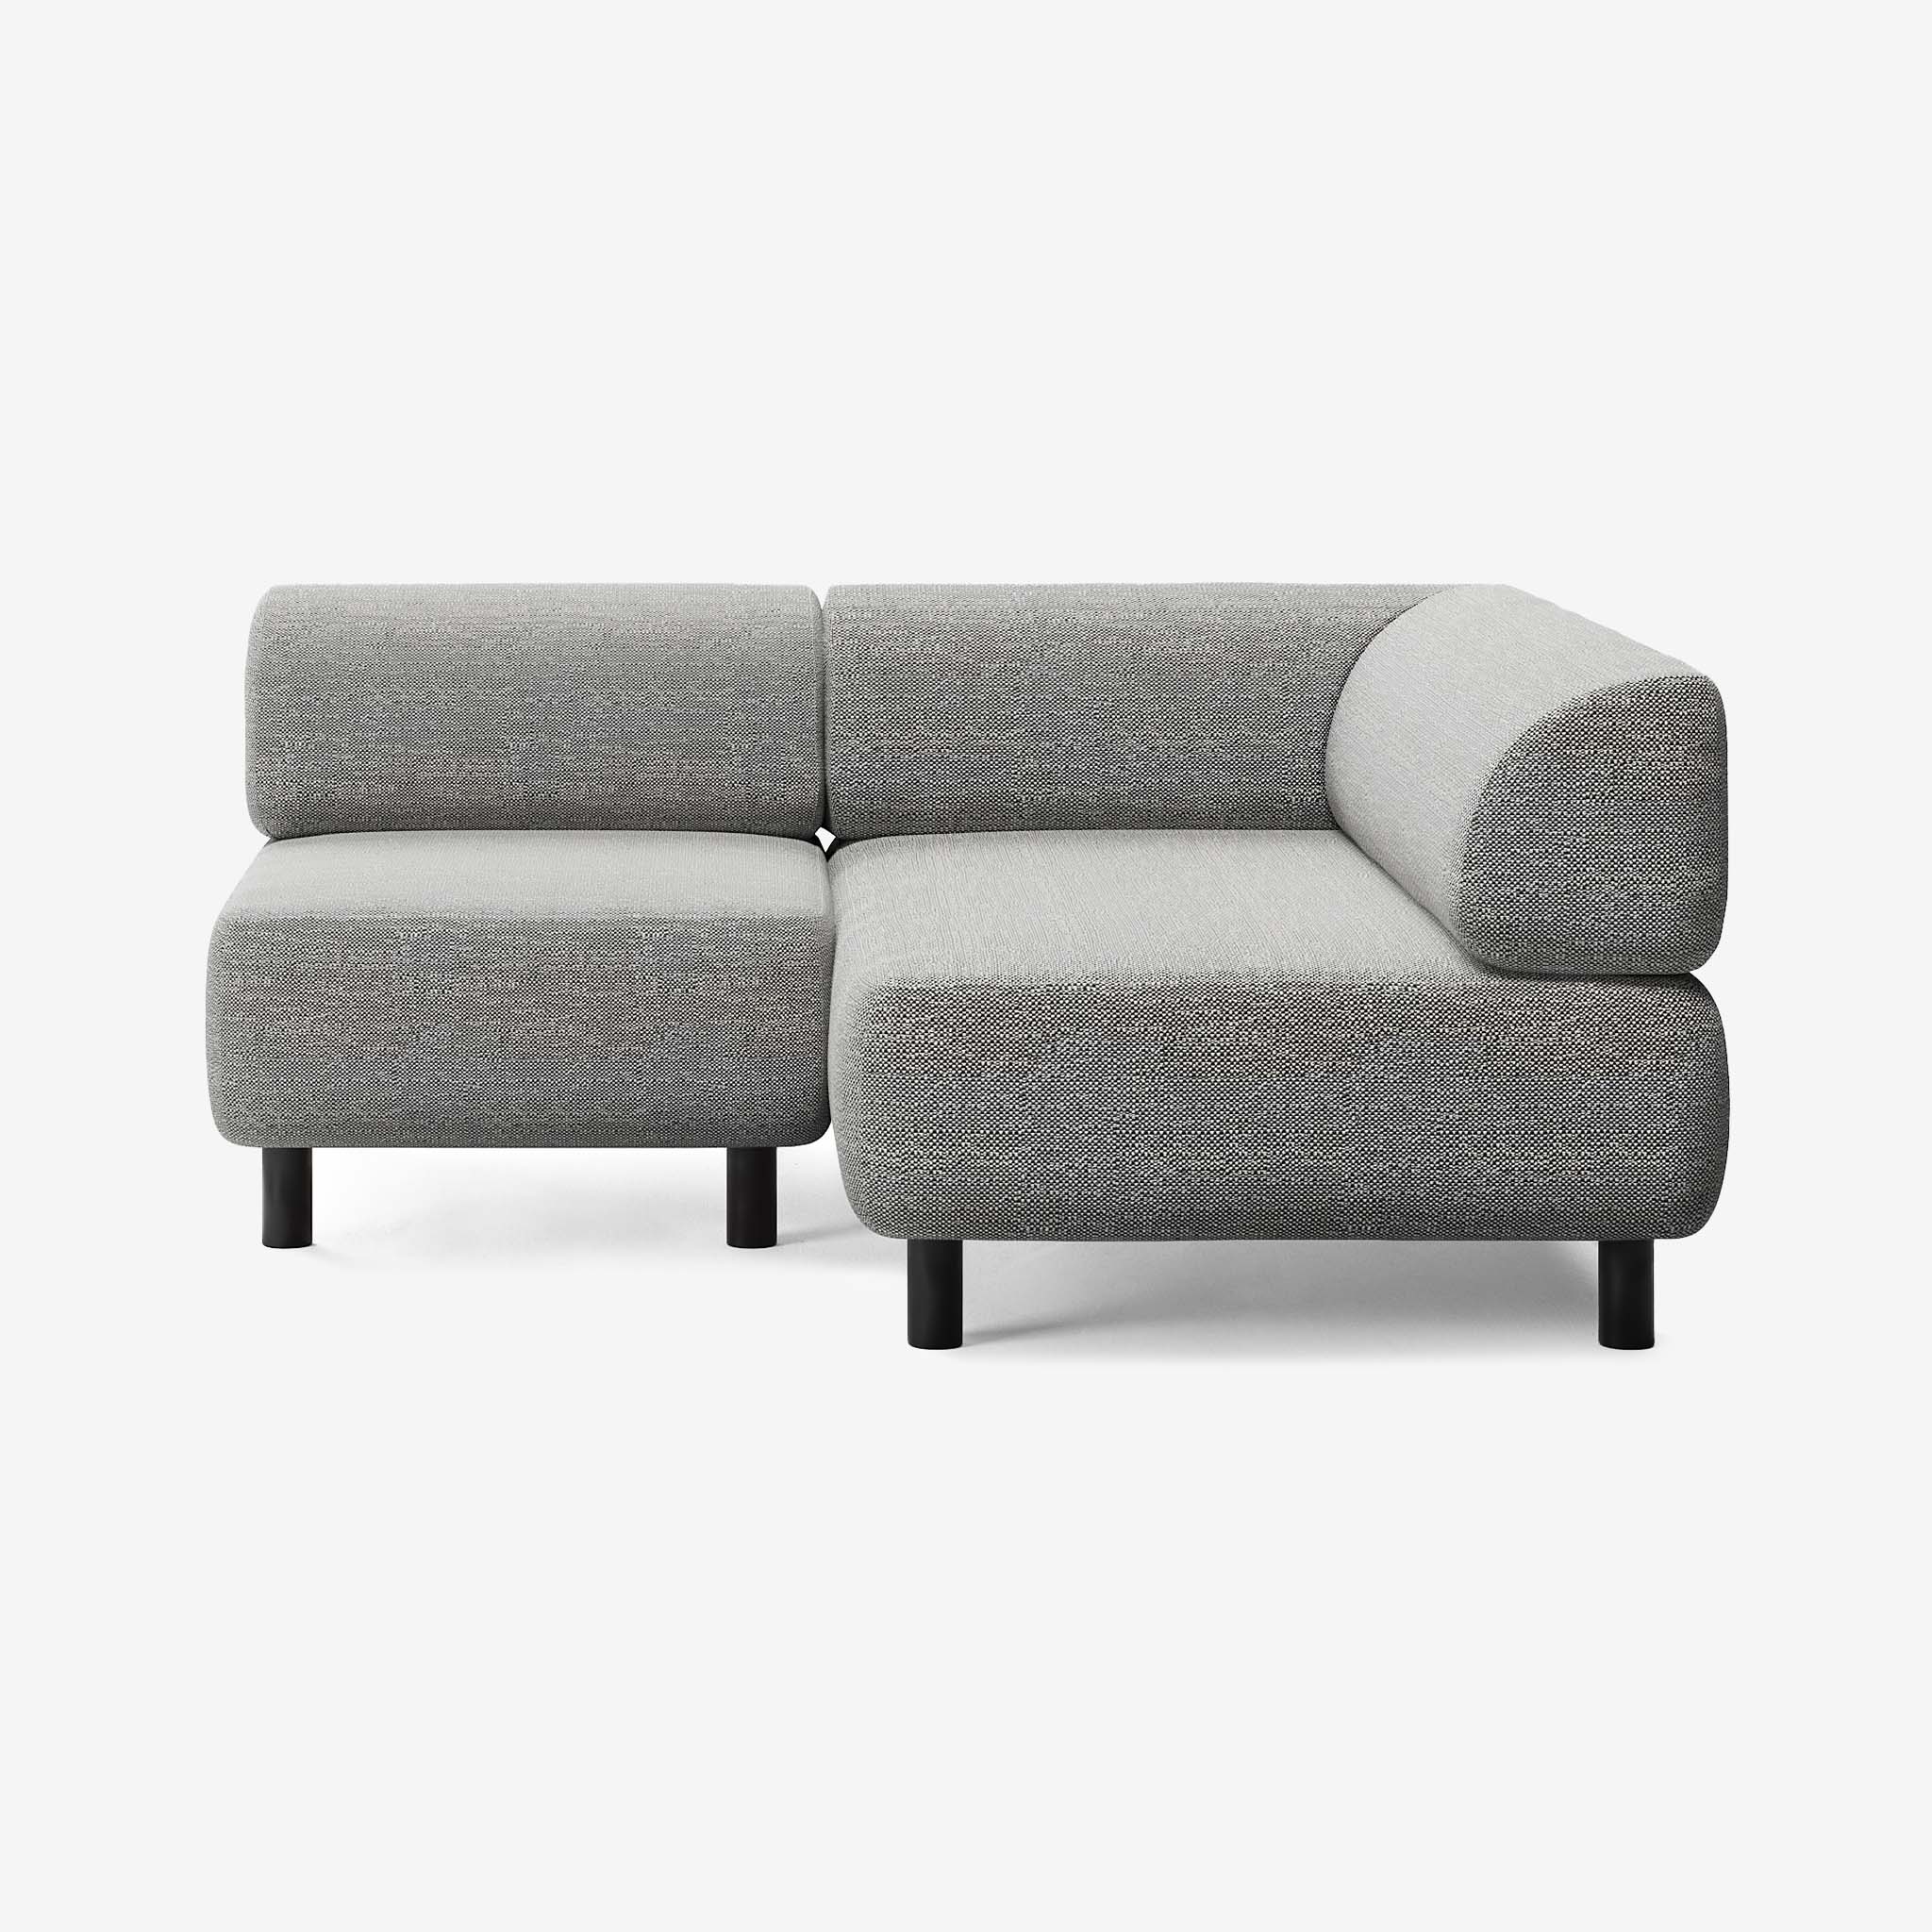 Bolder sofa 170x150 cm 